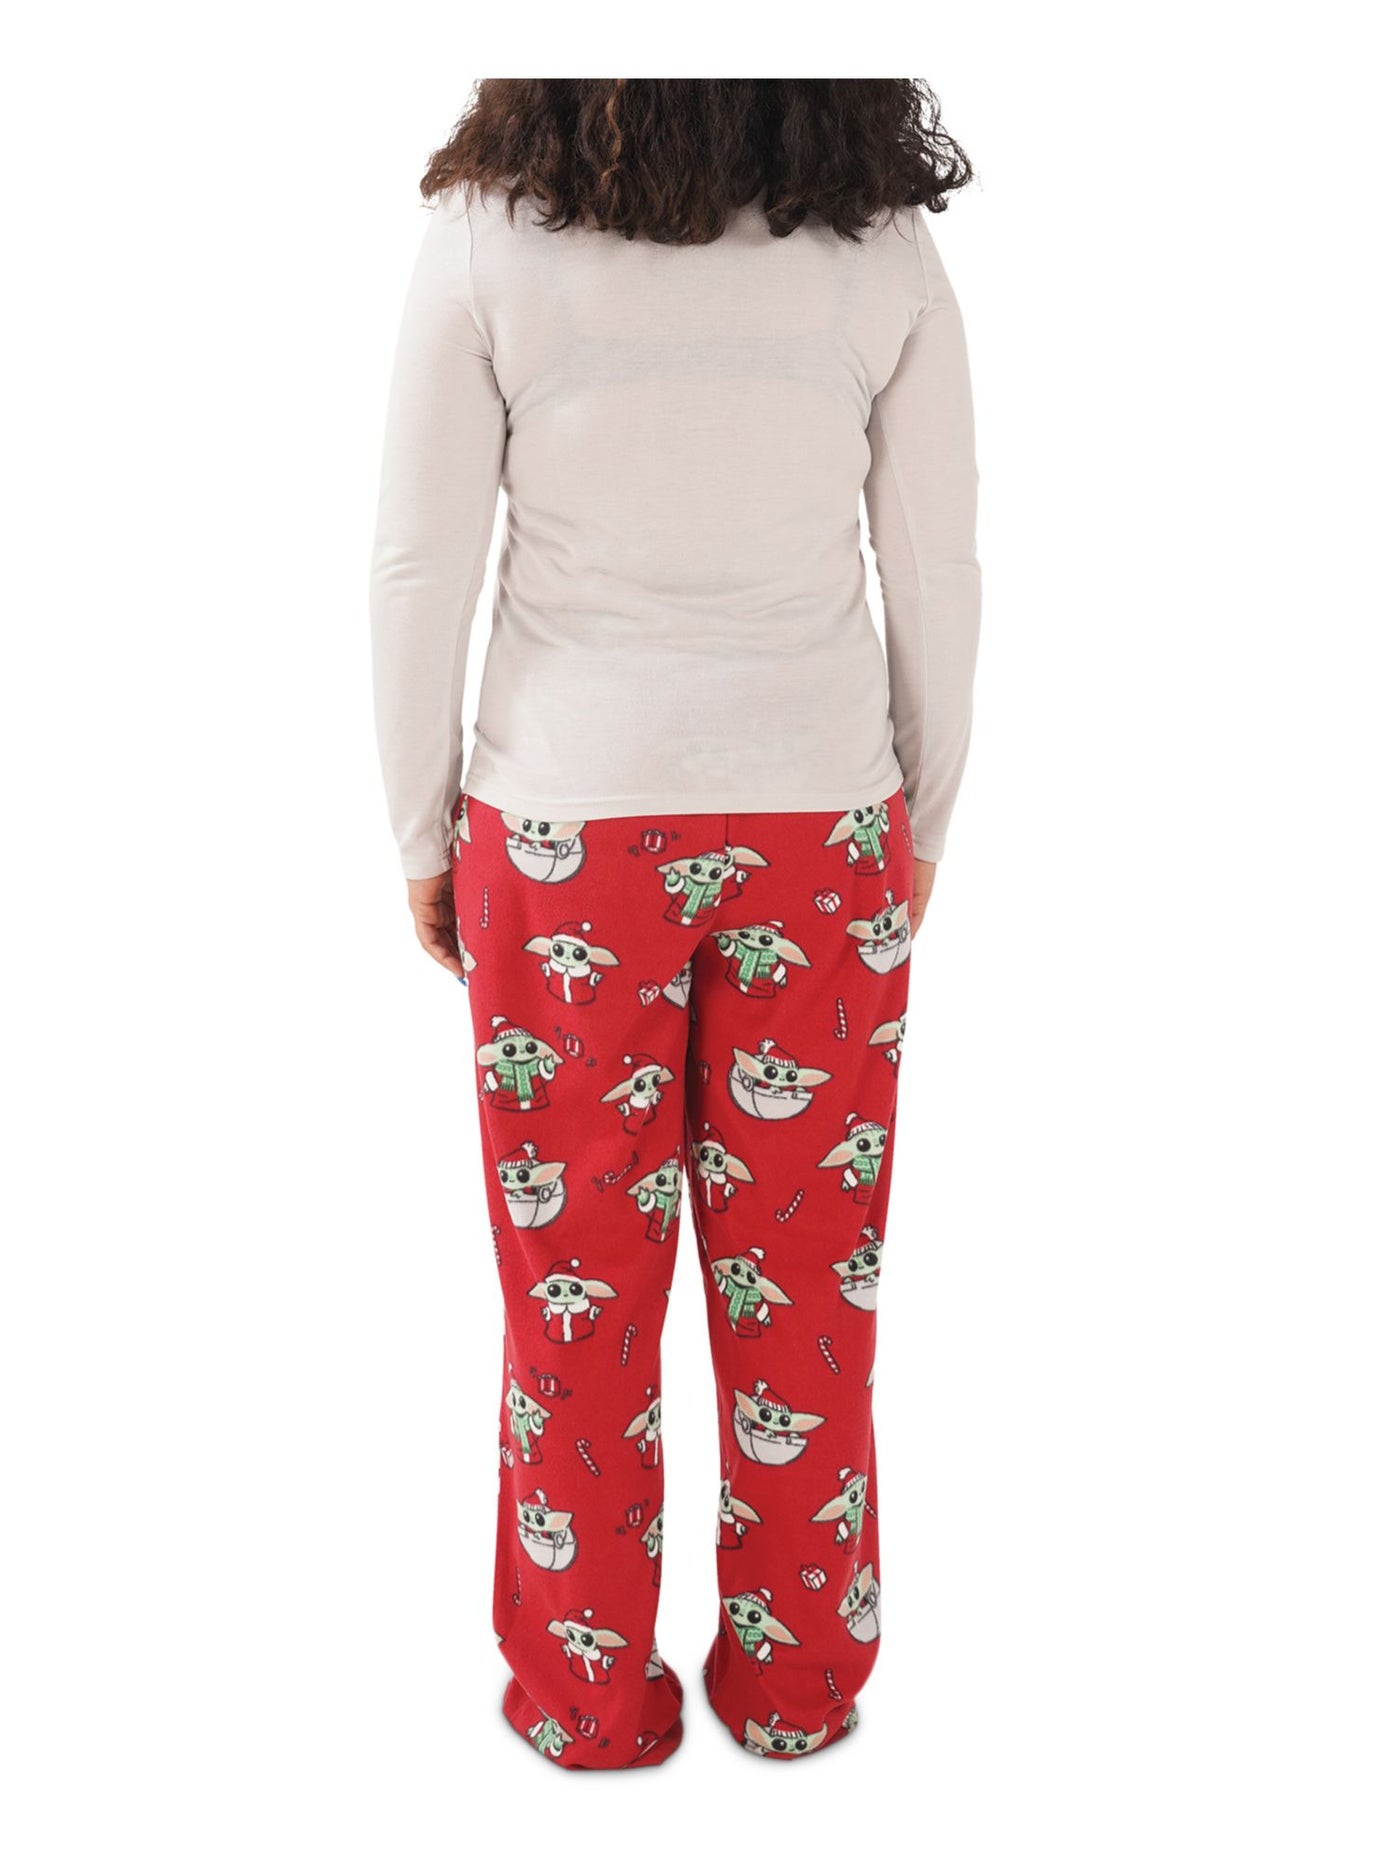 HYBRID APPAREL Womens Red Graphic Top Elastic Band Straight leg Pants Pajamas M